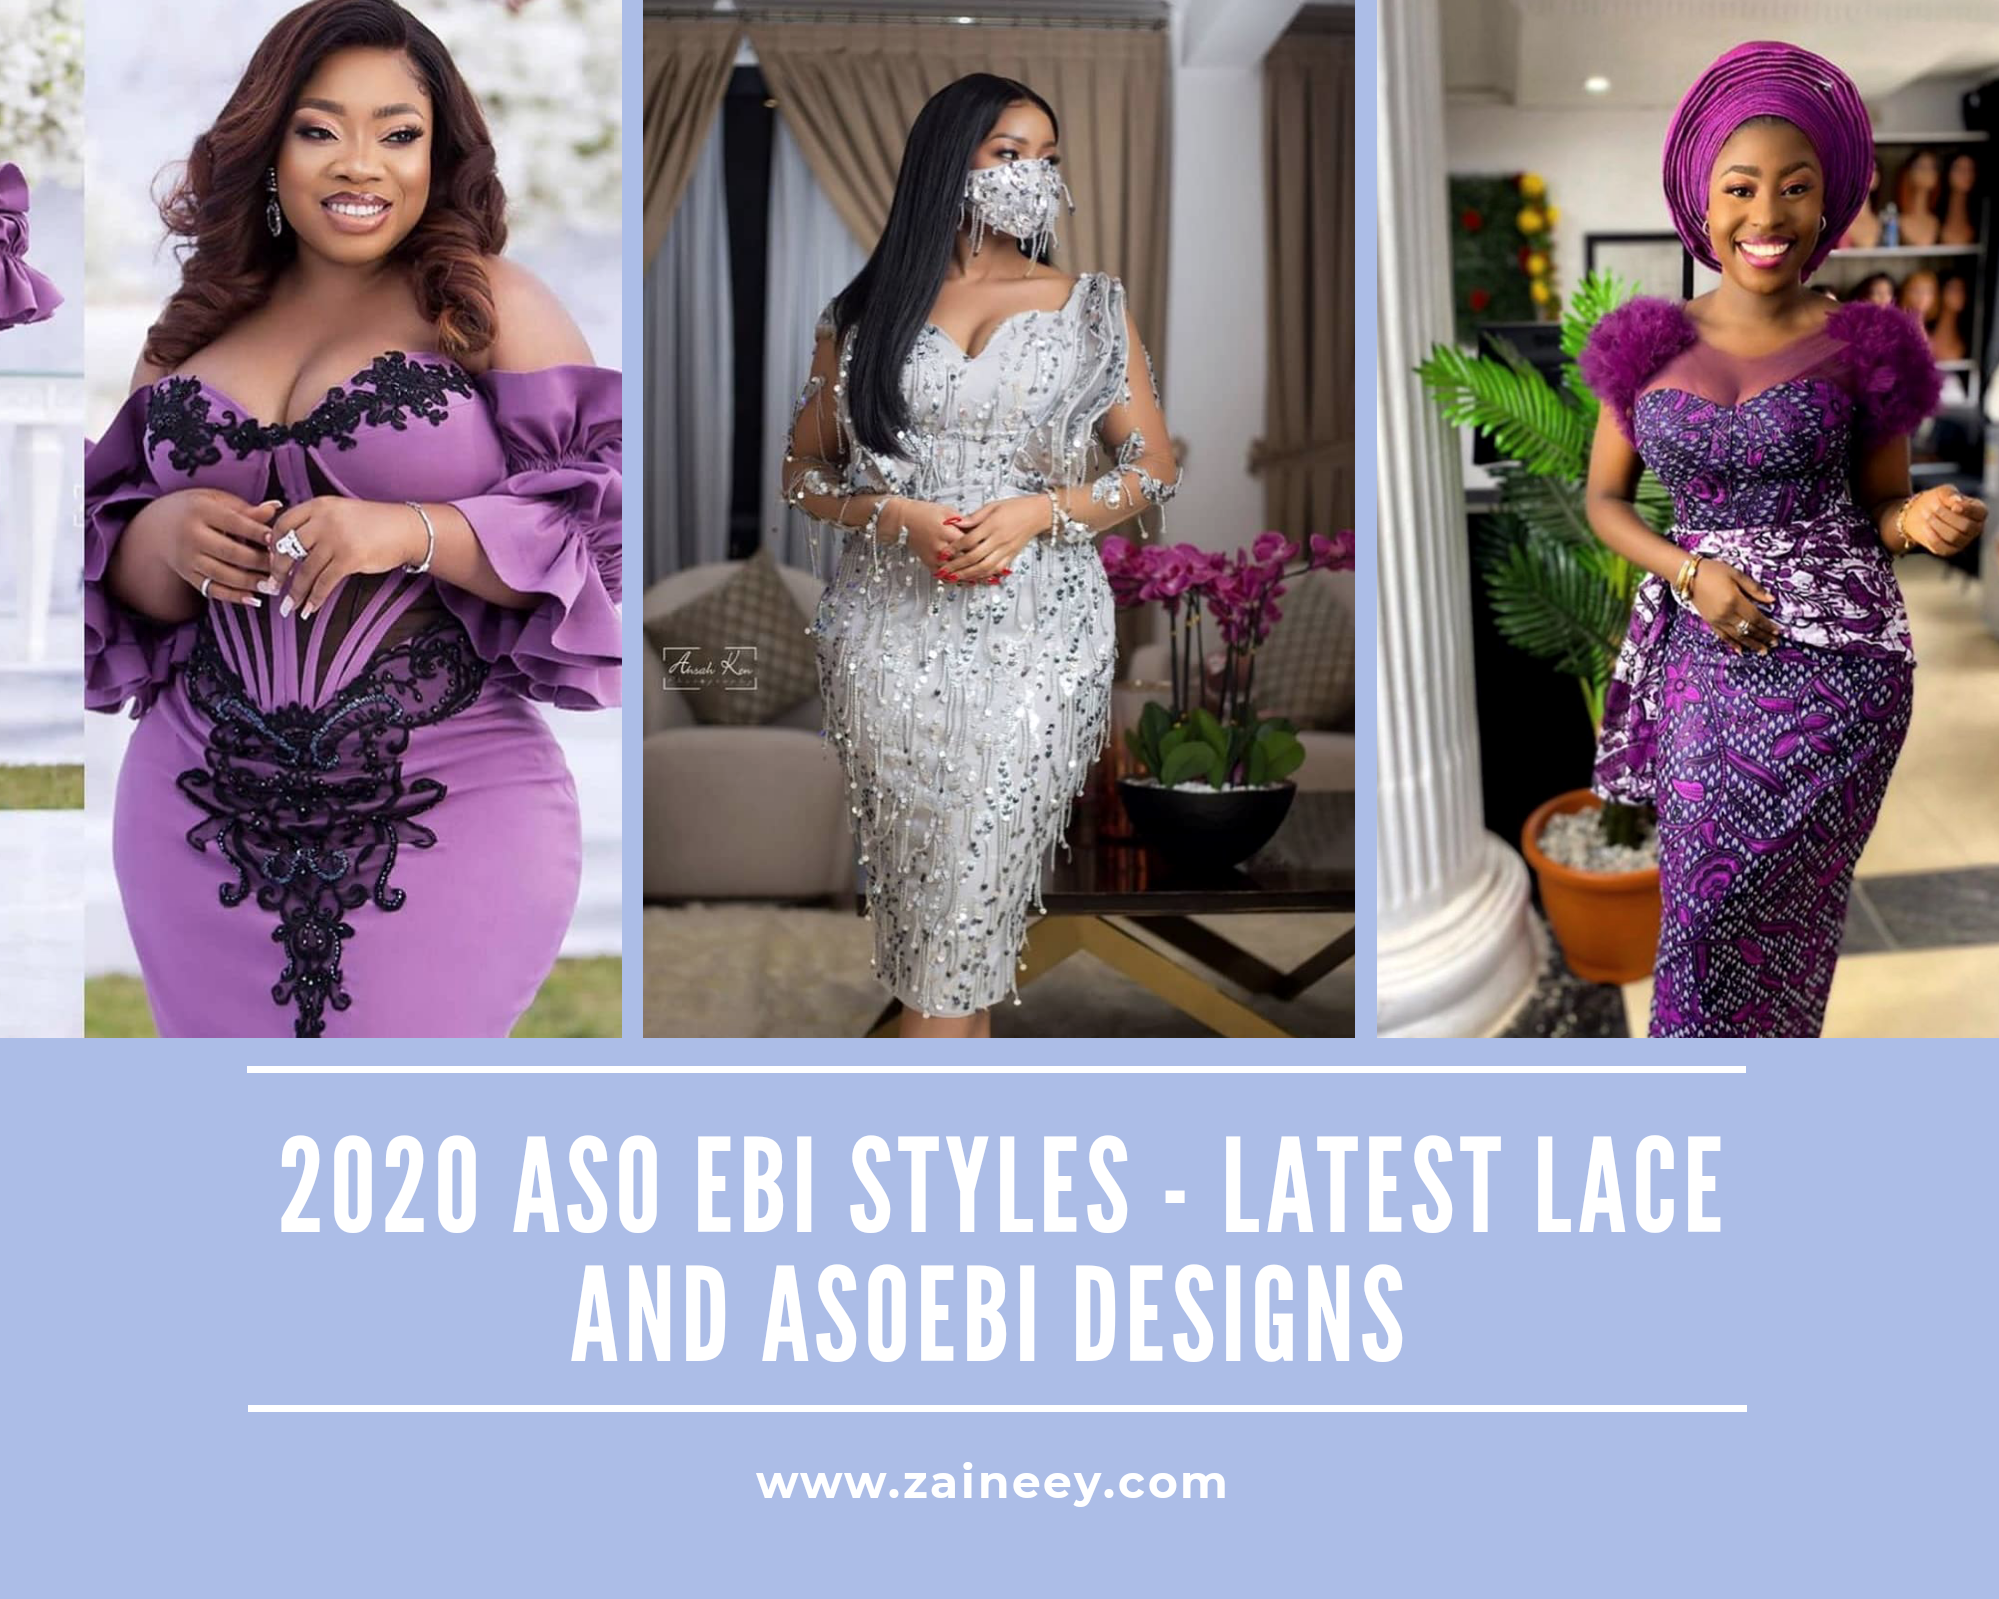 2020 Asoebi Styles - Latest Lace and Asoebi Designs 